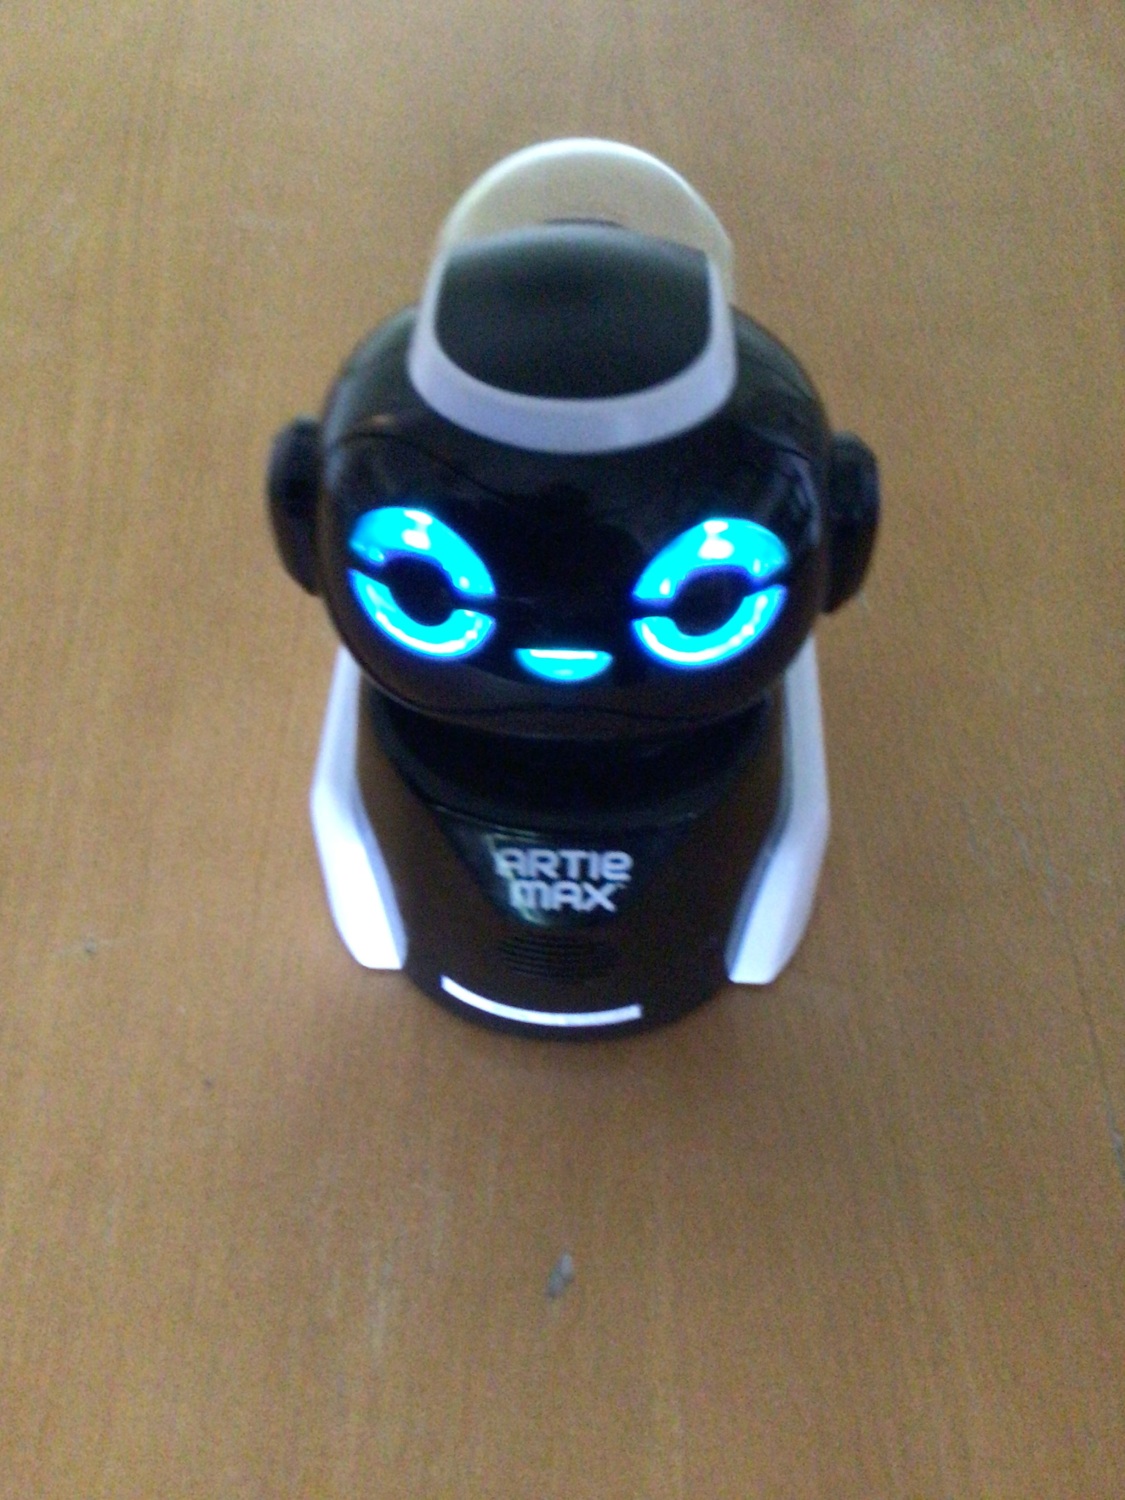 Artie Max Roboter